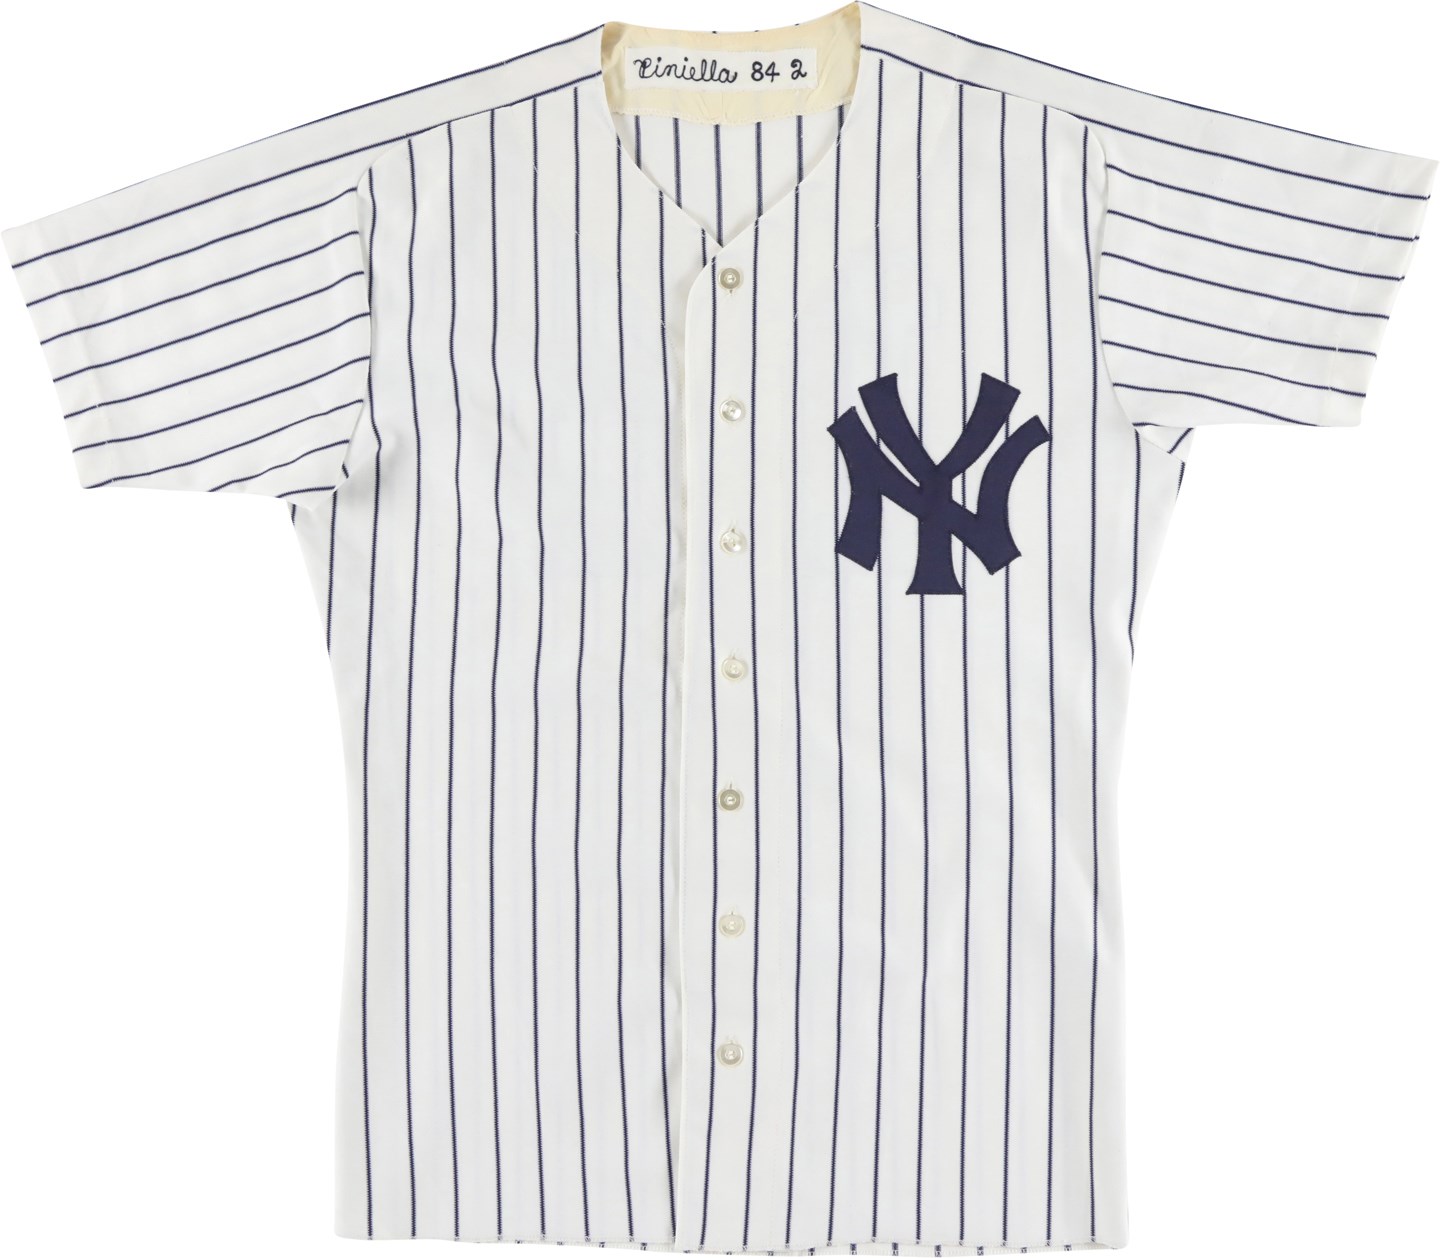 Baseball Equipment - 1984 Lou Piniella New York Yankees Game Worn Jersey